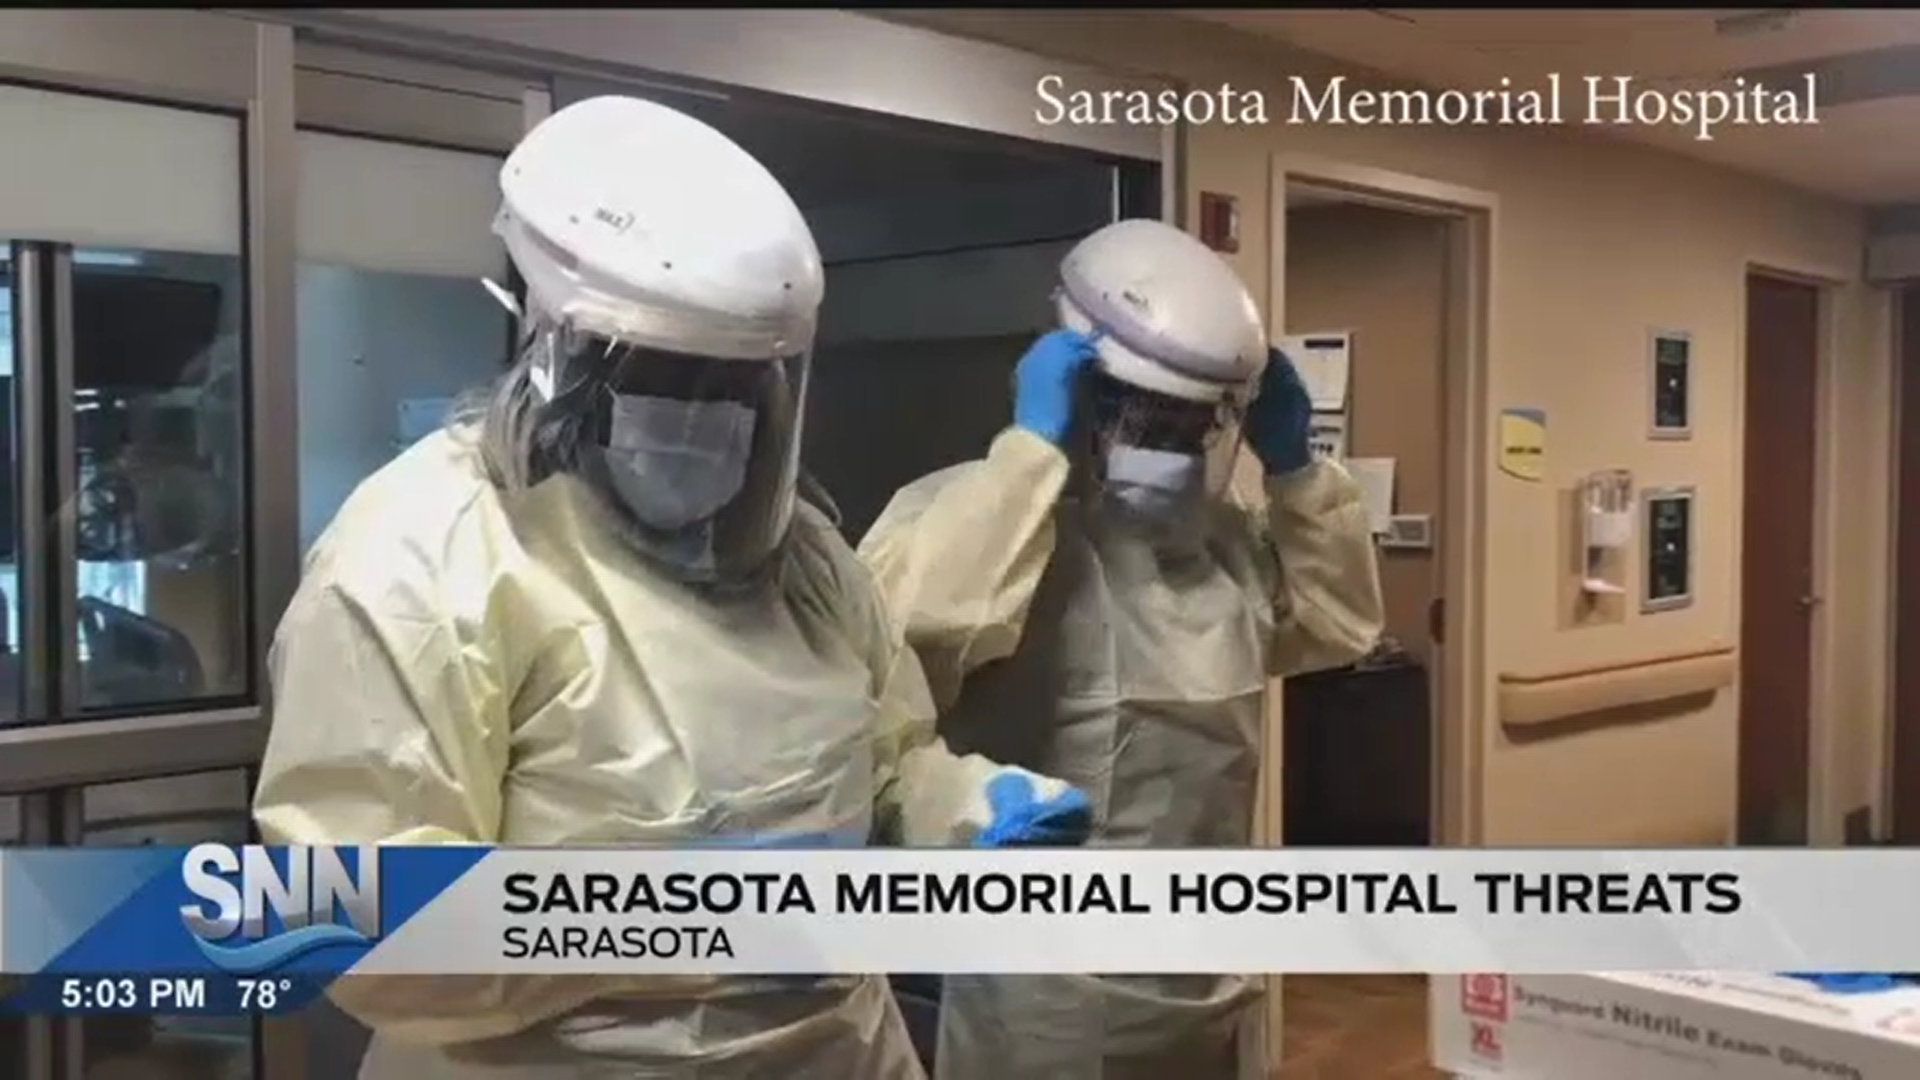 Sarasota Memorial Hospital Addresses Threats The Suncoast News And Scoop 4143